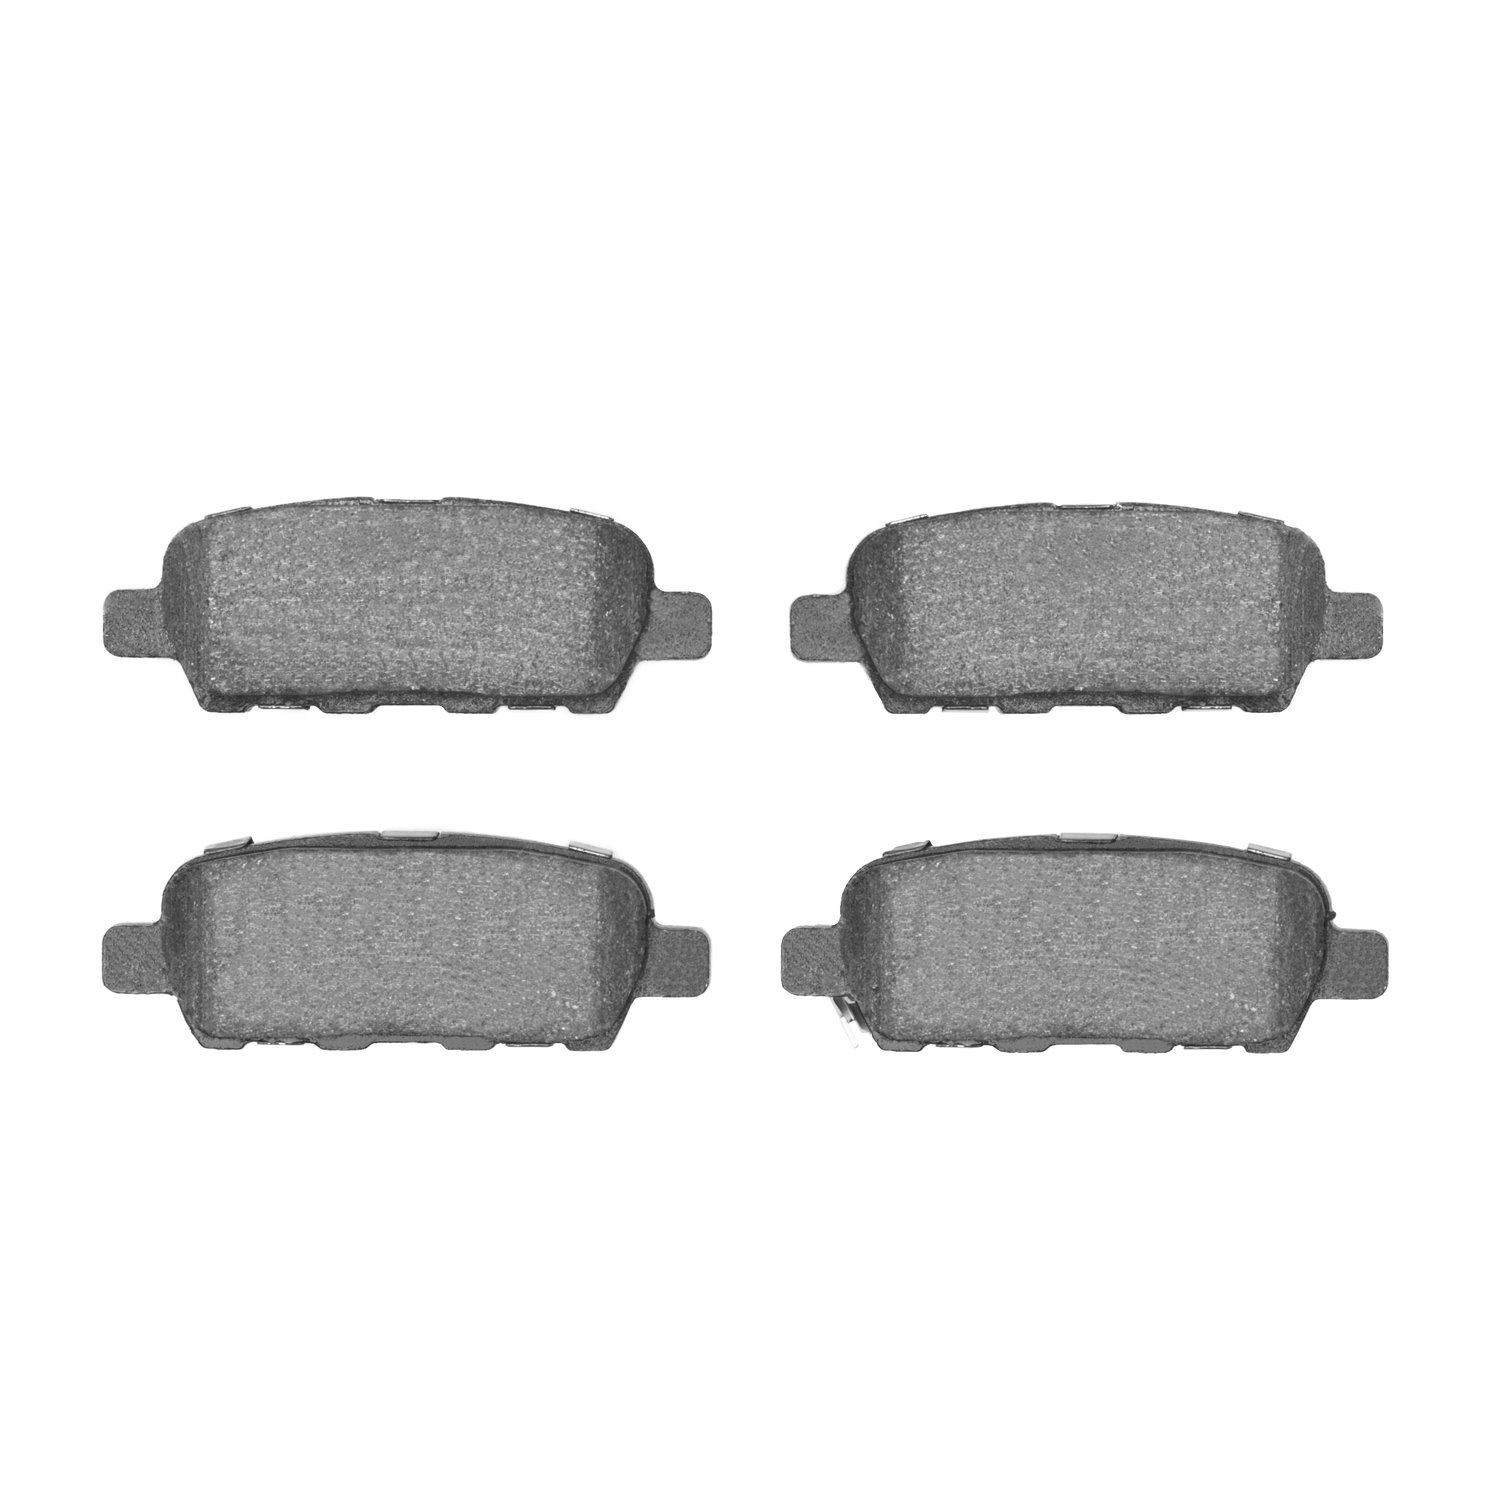 1551-0905-00 5000 Advanced Ceramic Brake Pads, Fits Select Multiple Makes/Models, Position: Rear